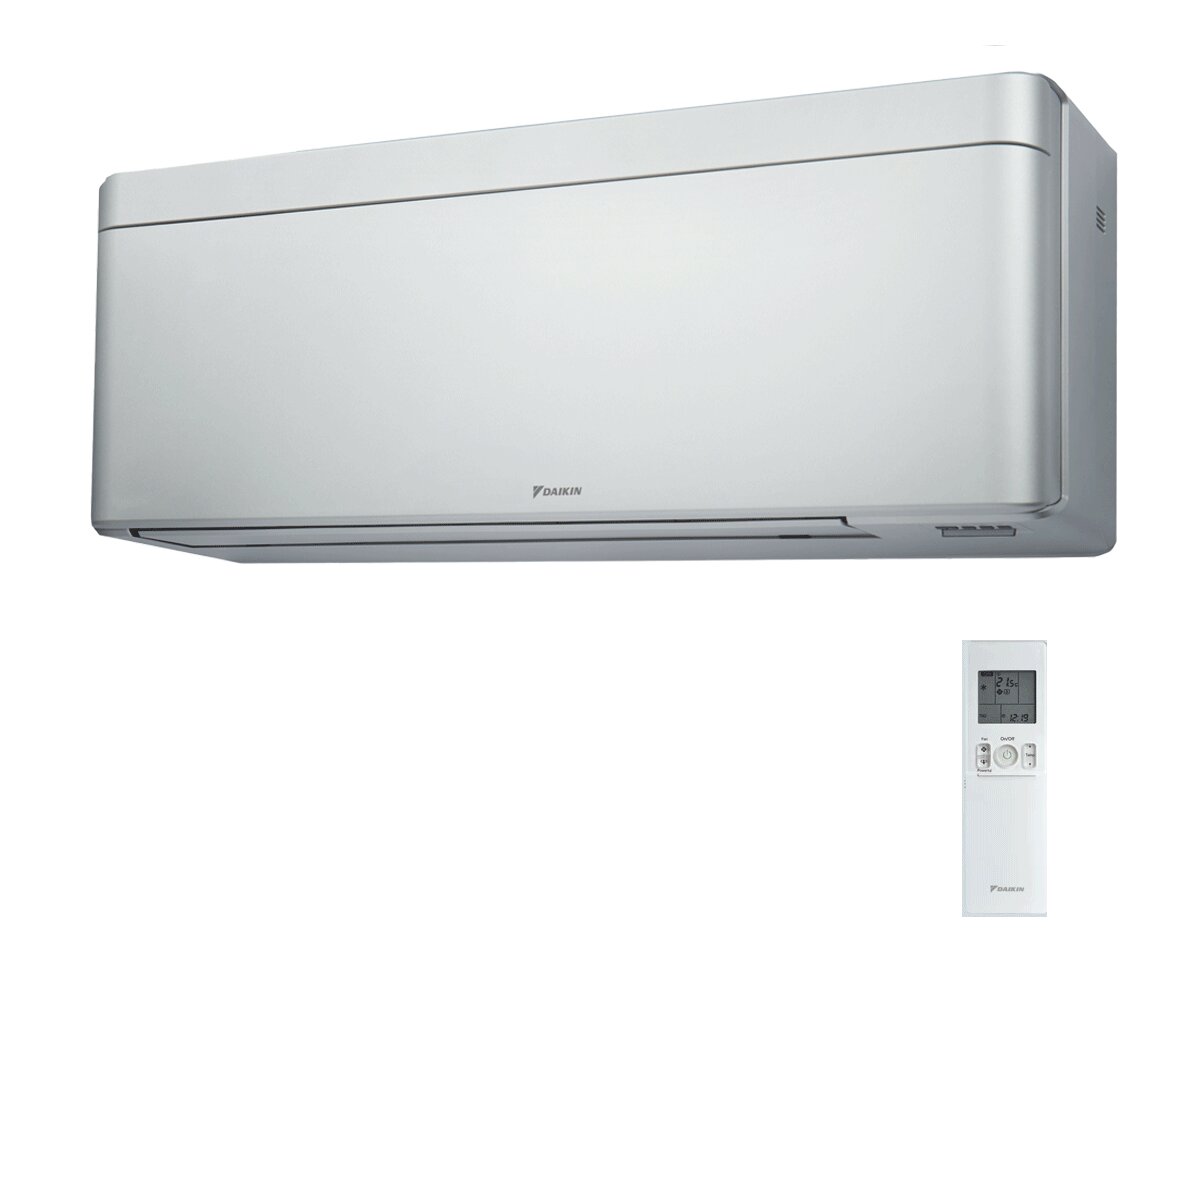 Daikin Stylish Silver penta split air conditioner 9000+9000+12000+12000+12000 BTU inverter A++ wifi external unit 7.8 kW